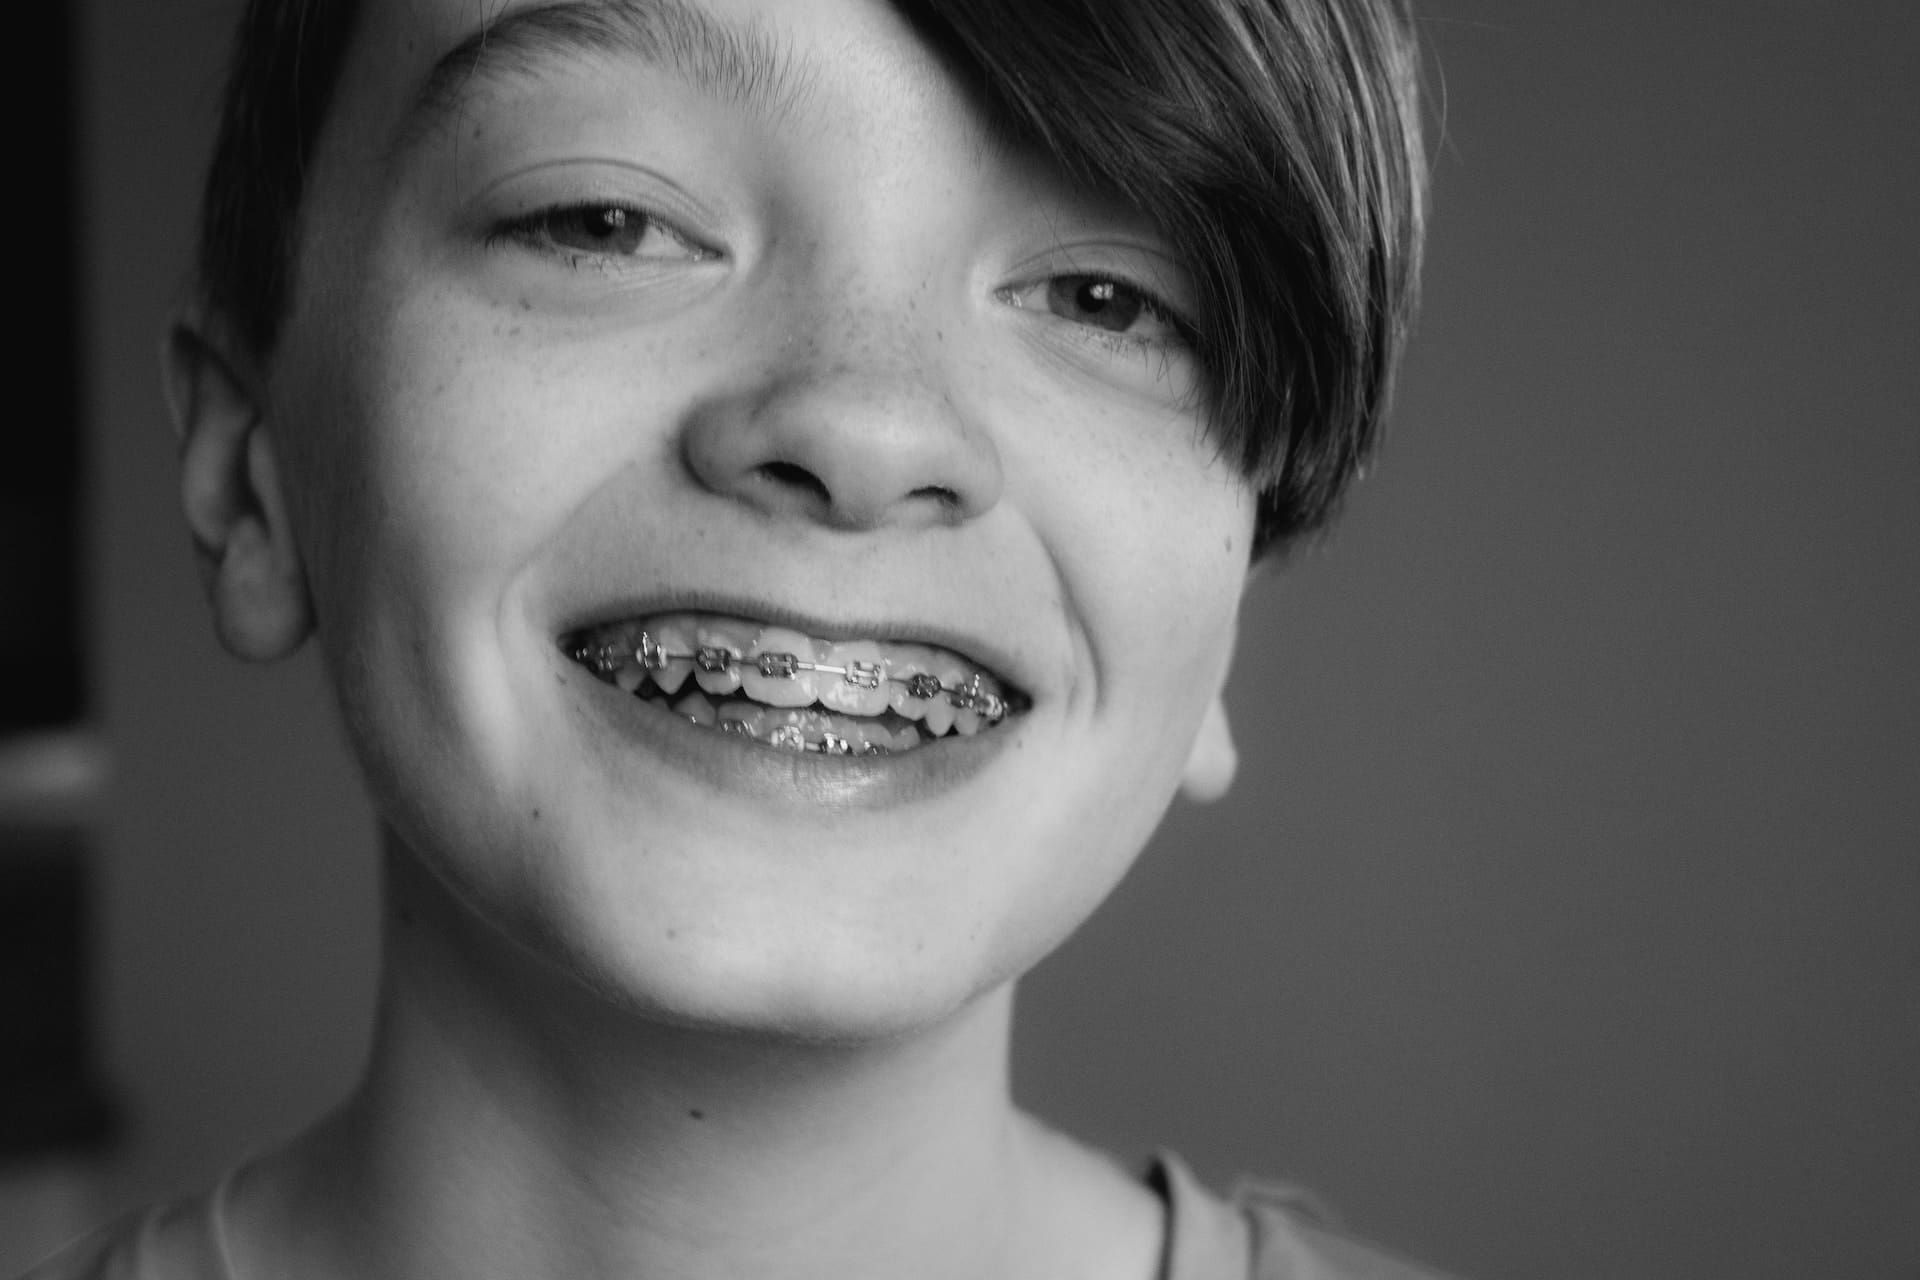 kid with braces